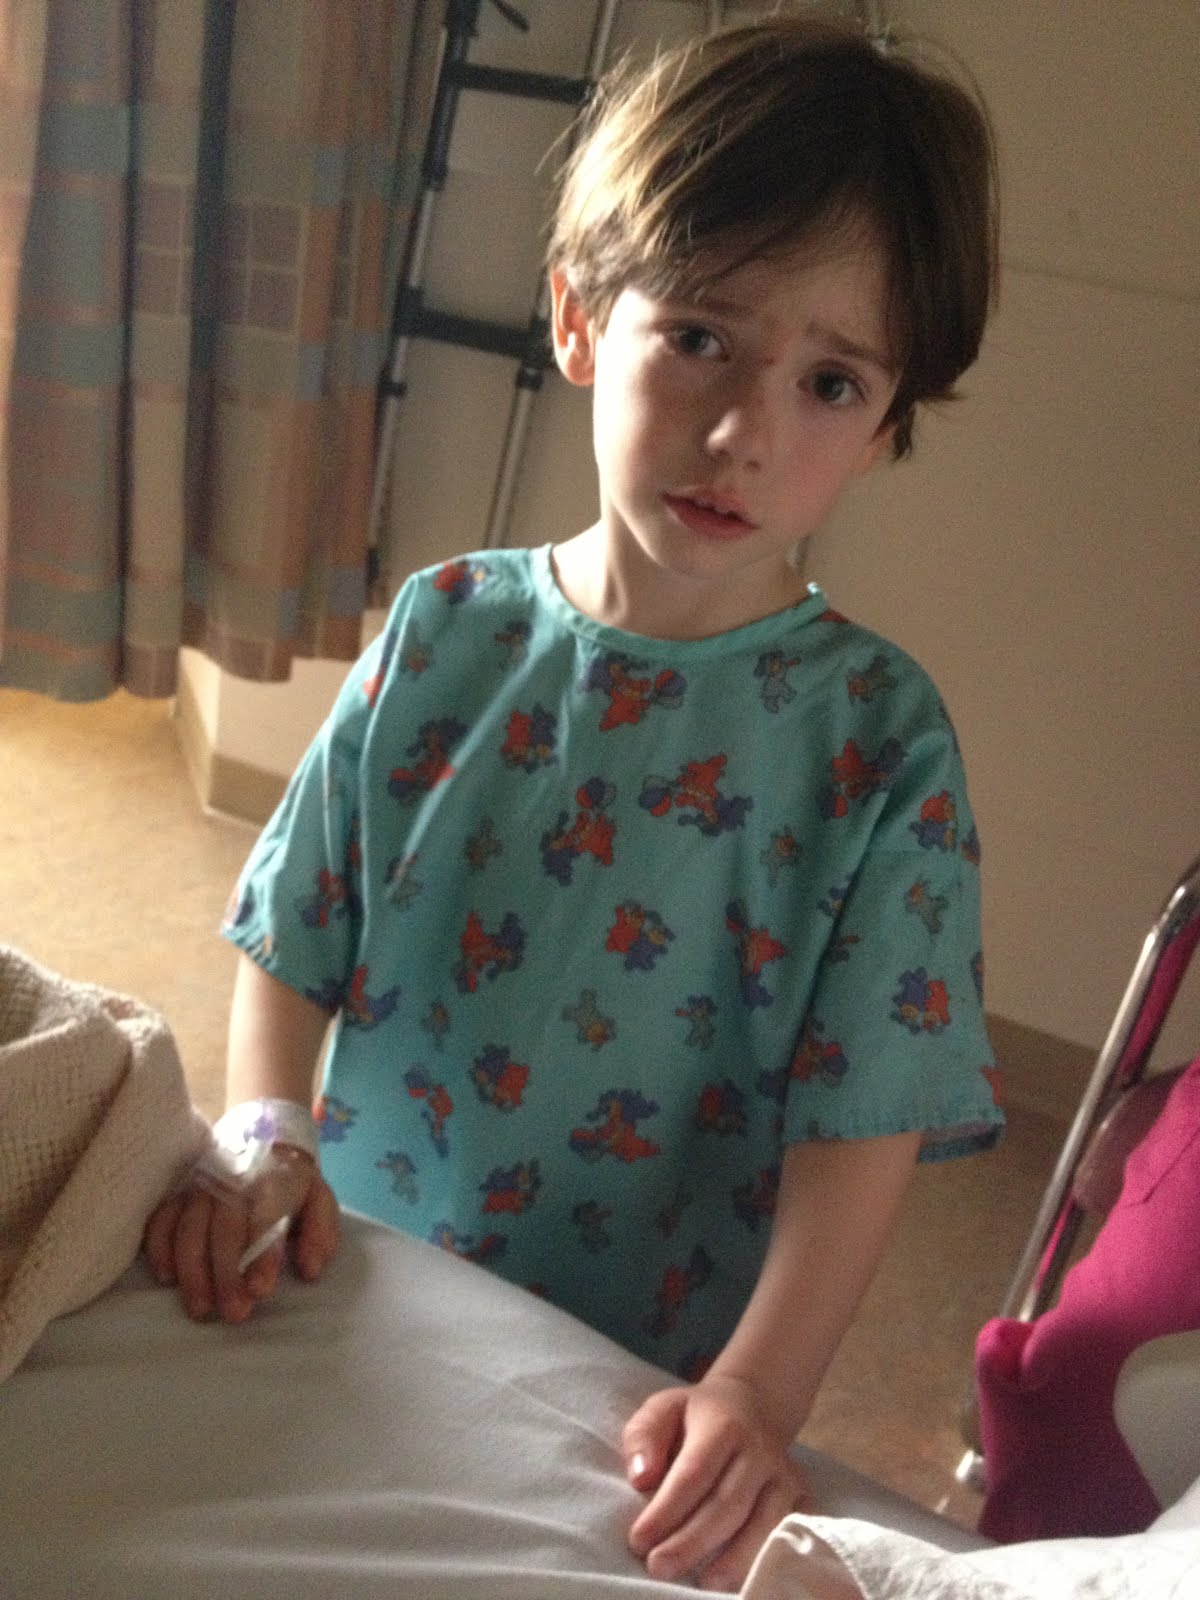 my son's diagnosis April 1, 2013